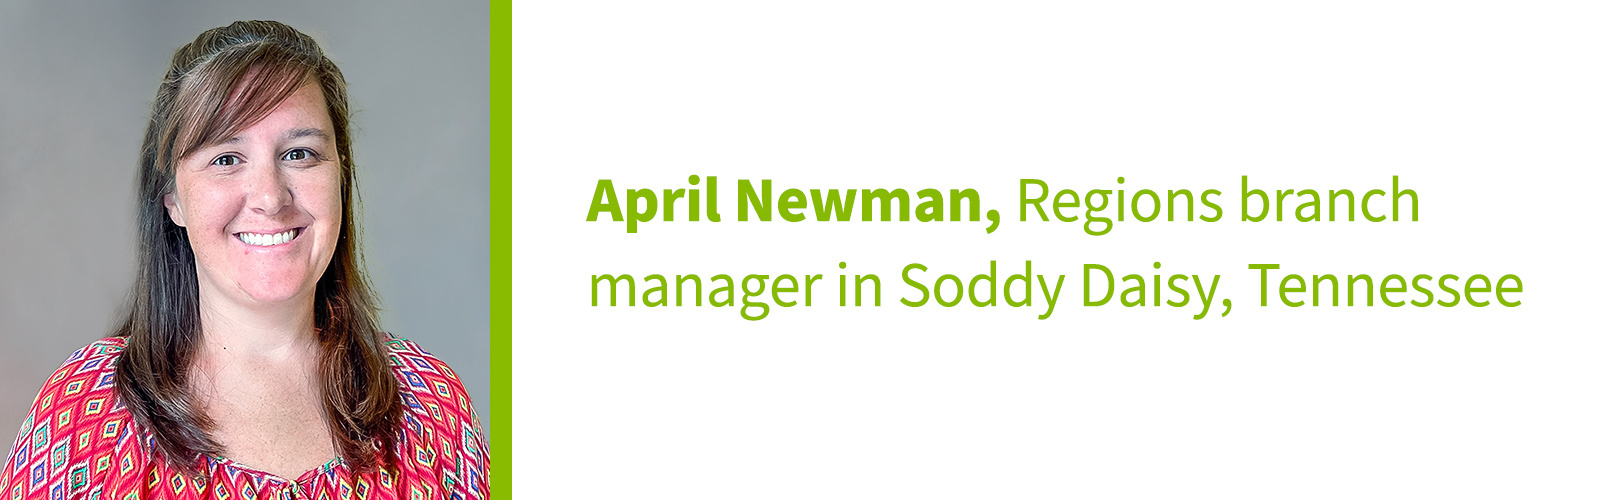 April Newman, Regions branch manager in Soddy Daisy, Tennessee